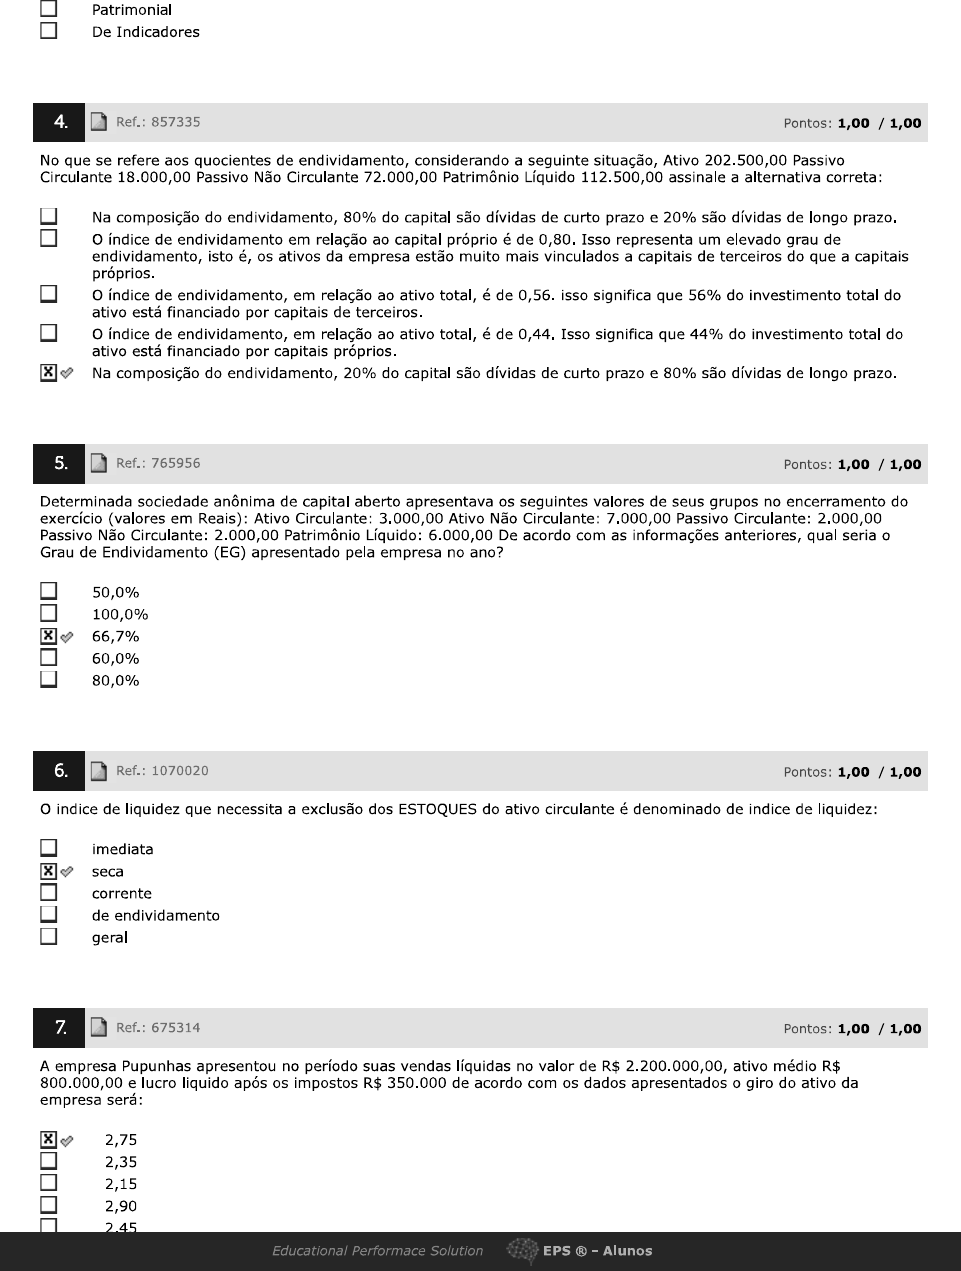 Analise Das DemonstraÇoes Financeiras Análise Das Demonstrações Financeiras 3885